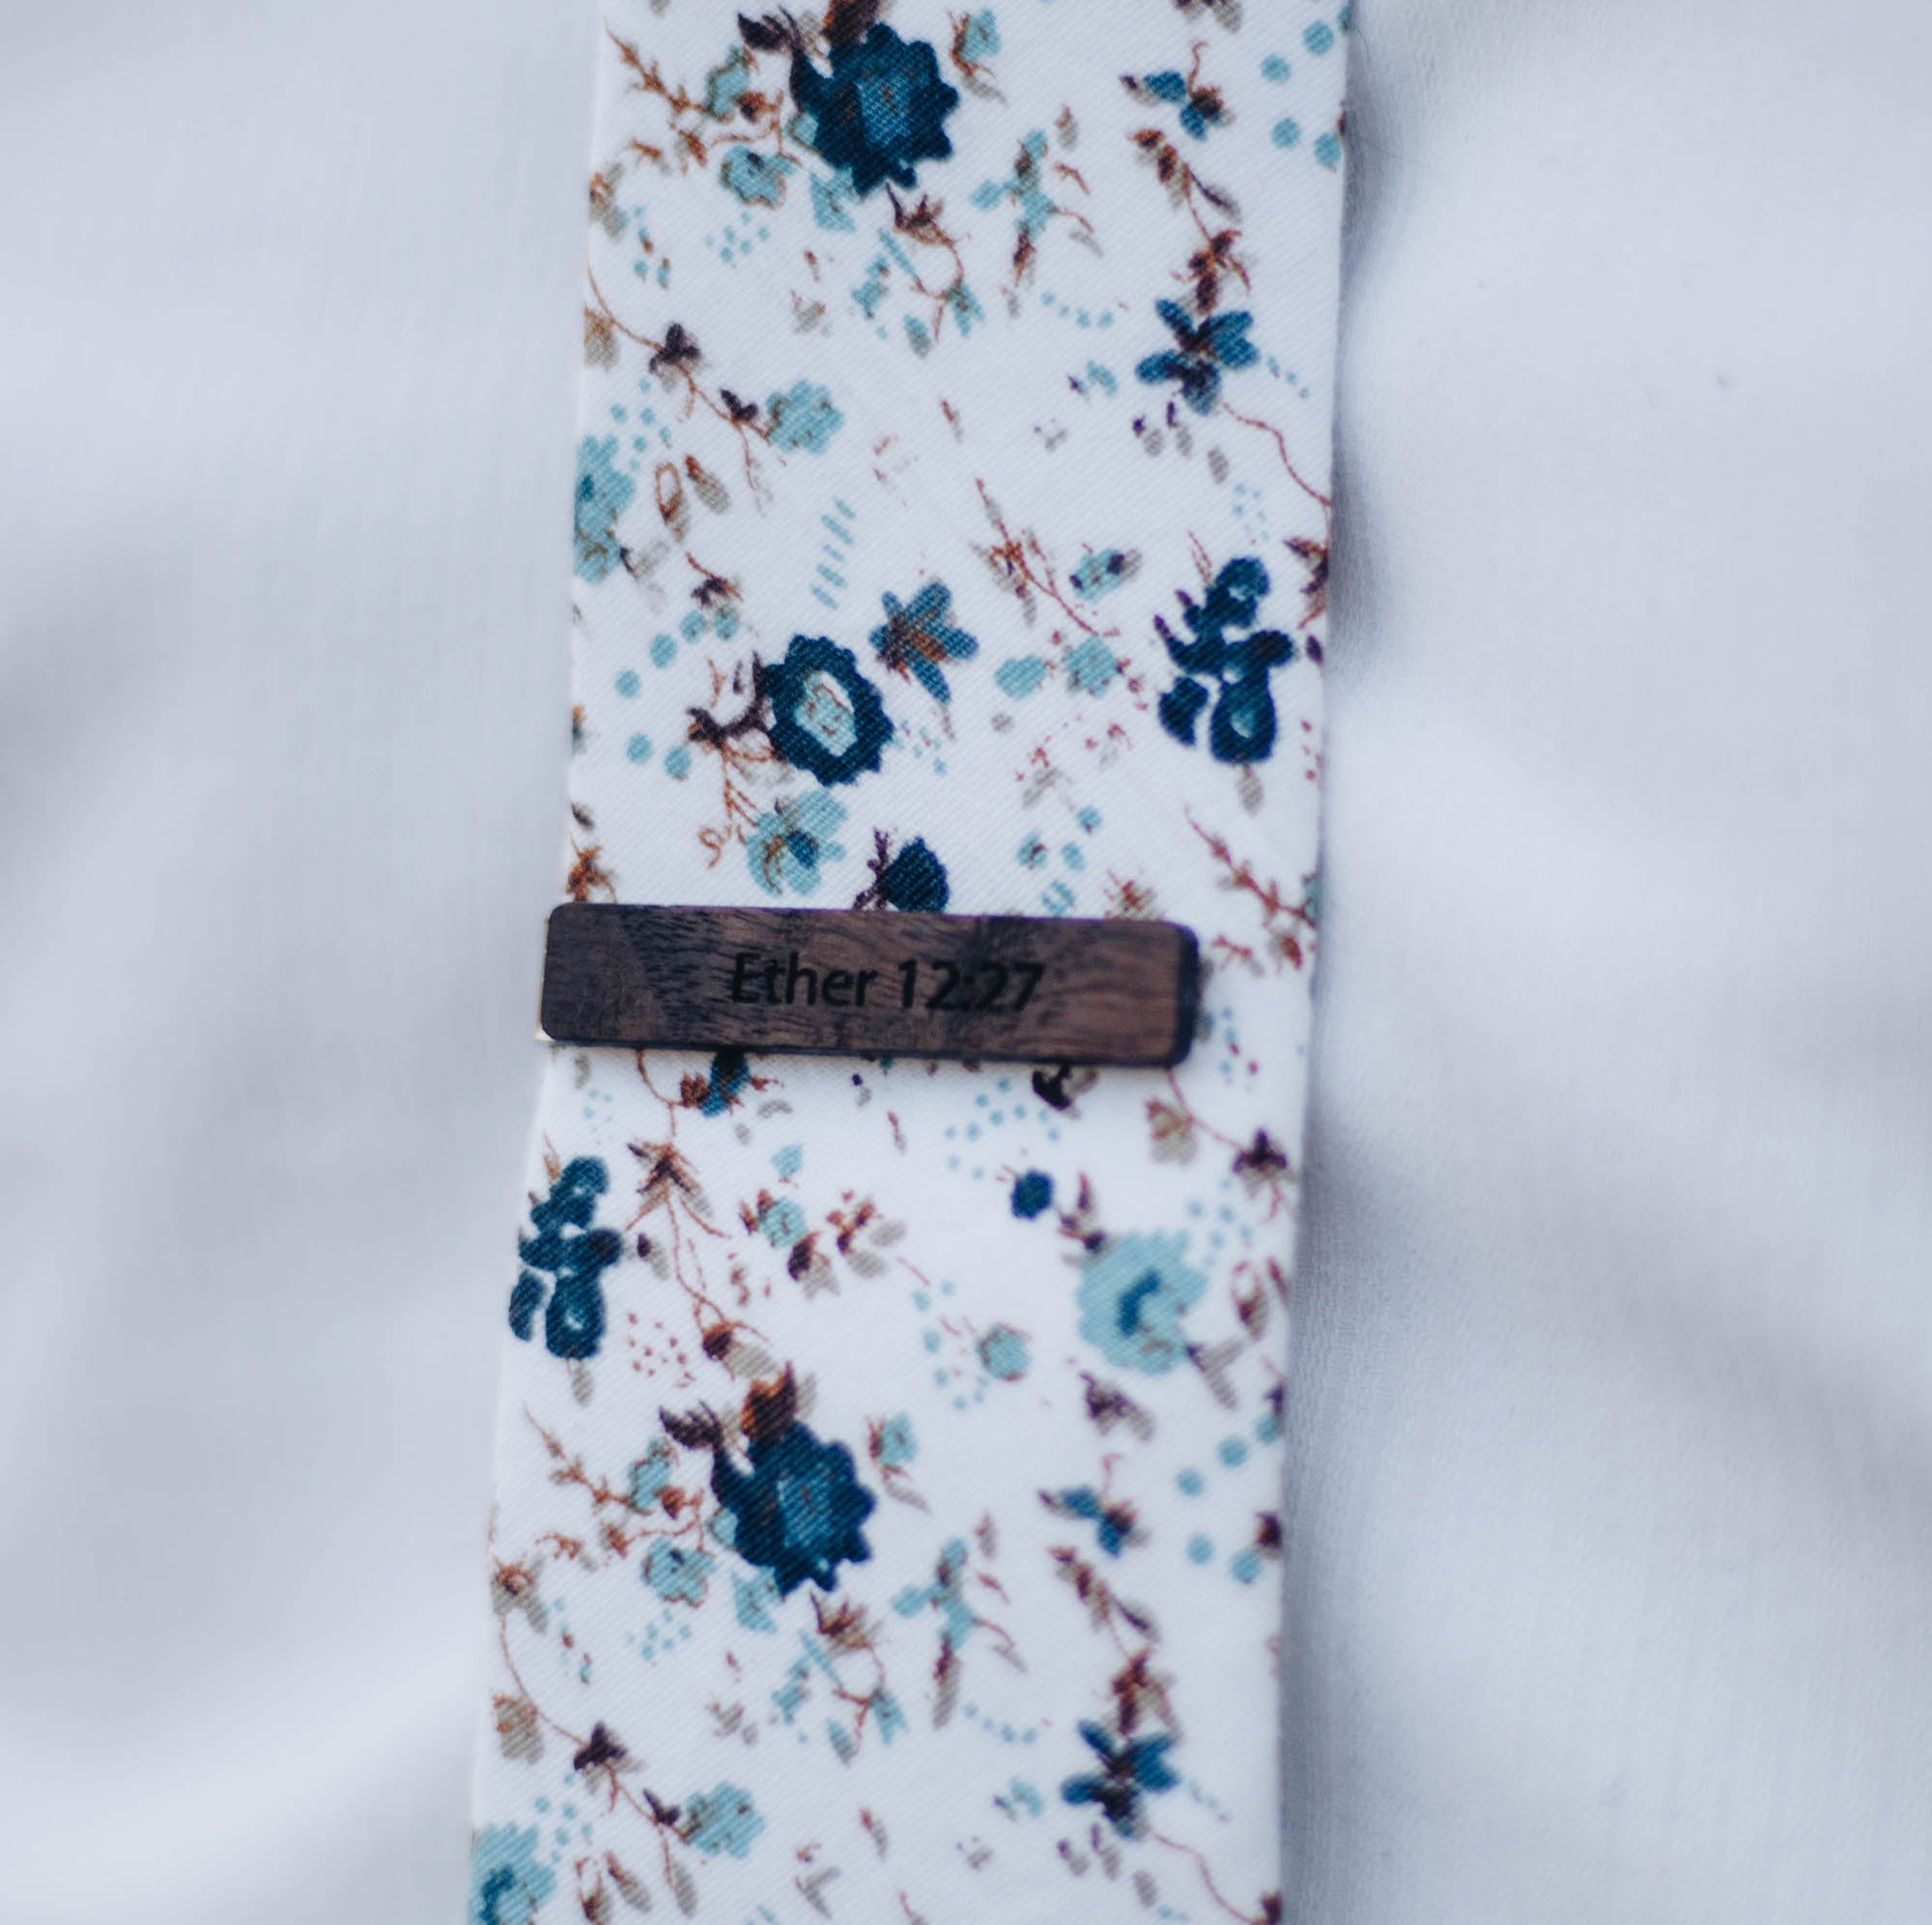 CUSTOM WEDDING Tie Clip - handmade personalized ebony wood tie bar -  elegant gift for men